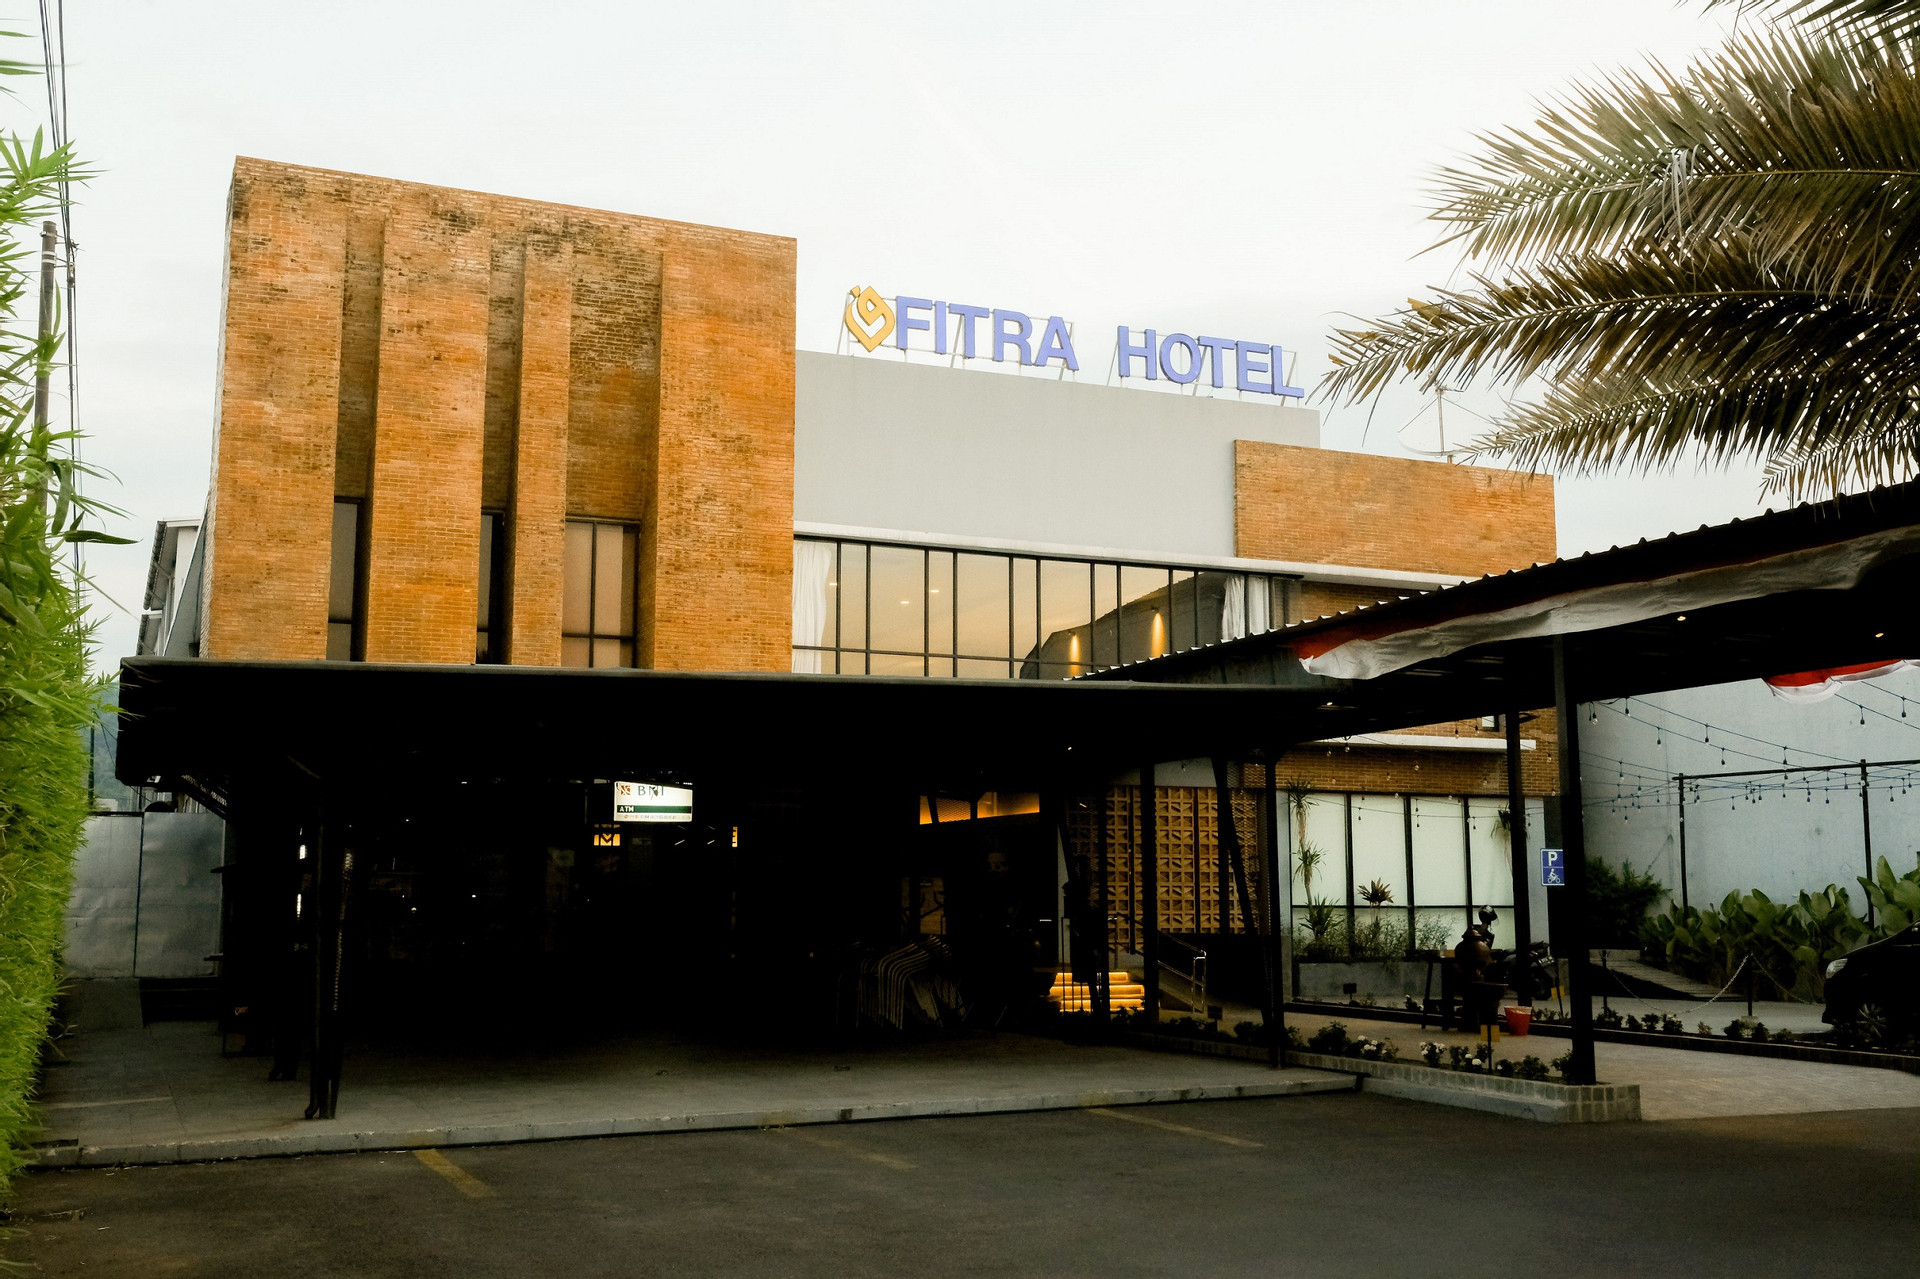 Fitra Hotel Majalengka, Majalengka